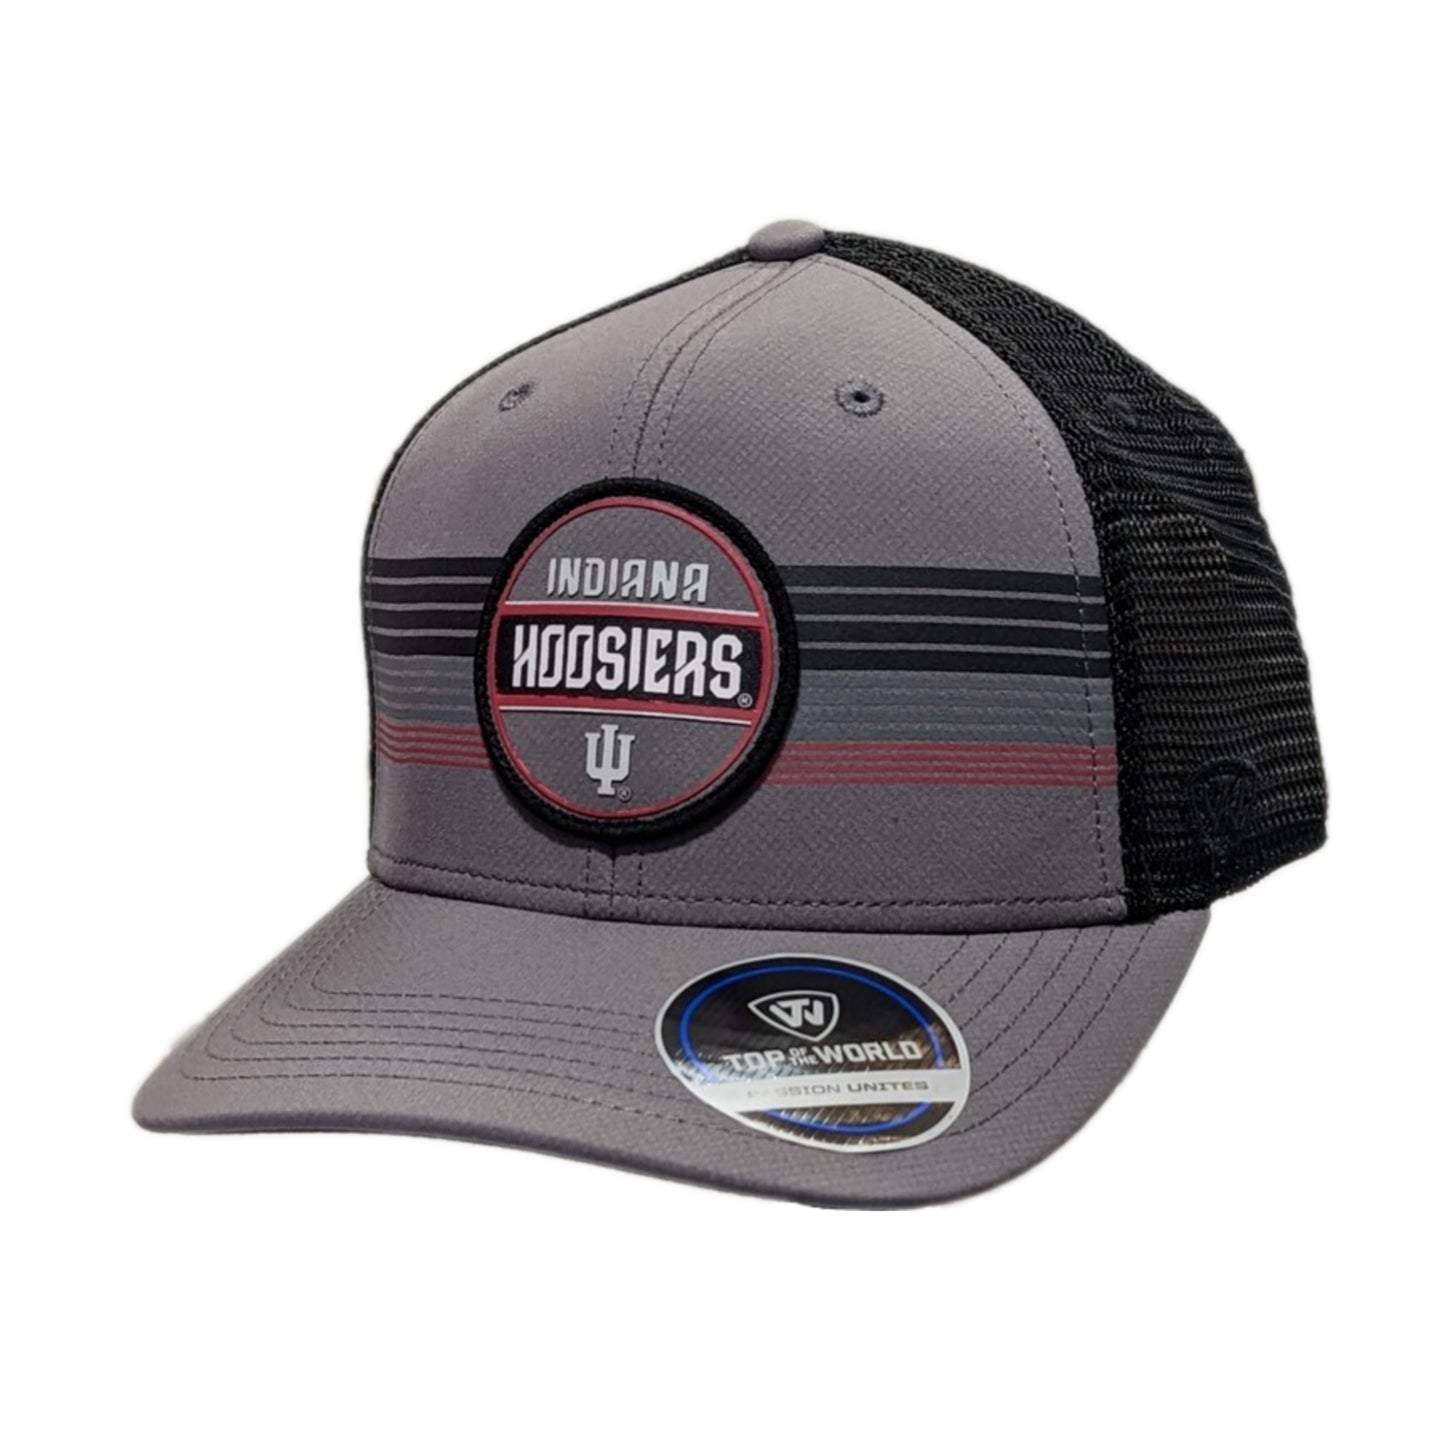 Indiana Hoosiers Top of the World Gray/Black Trucker Adjustable Snapback Hat